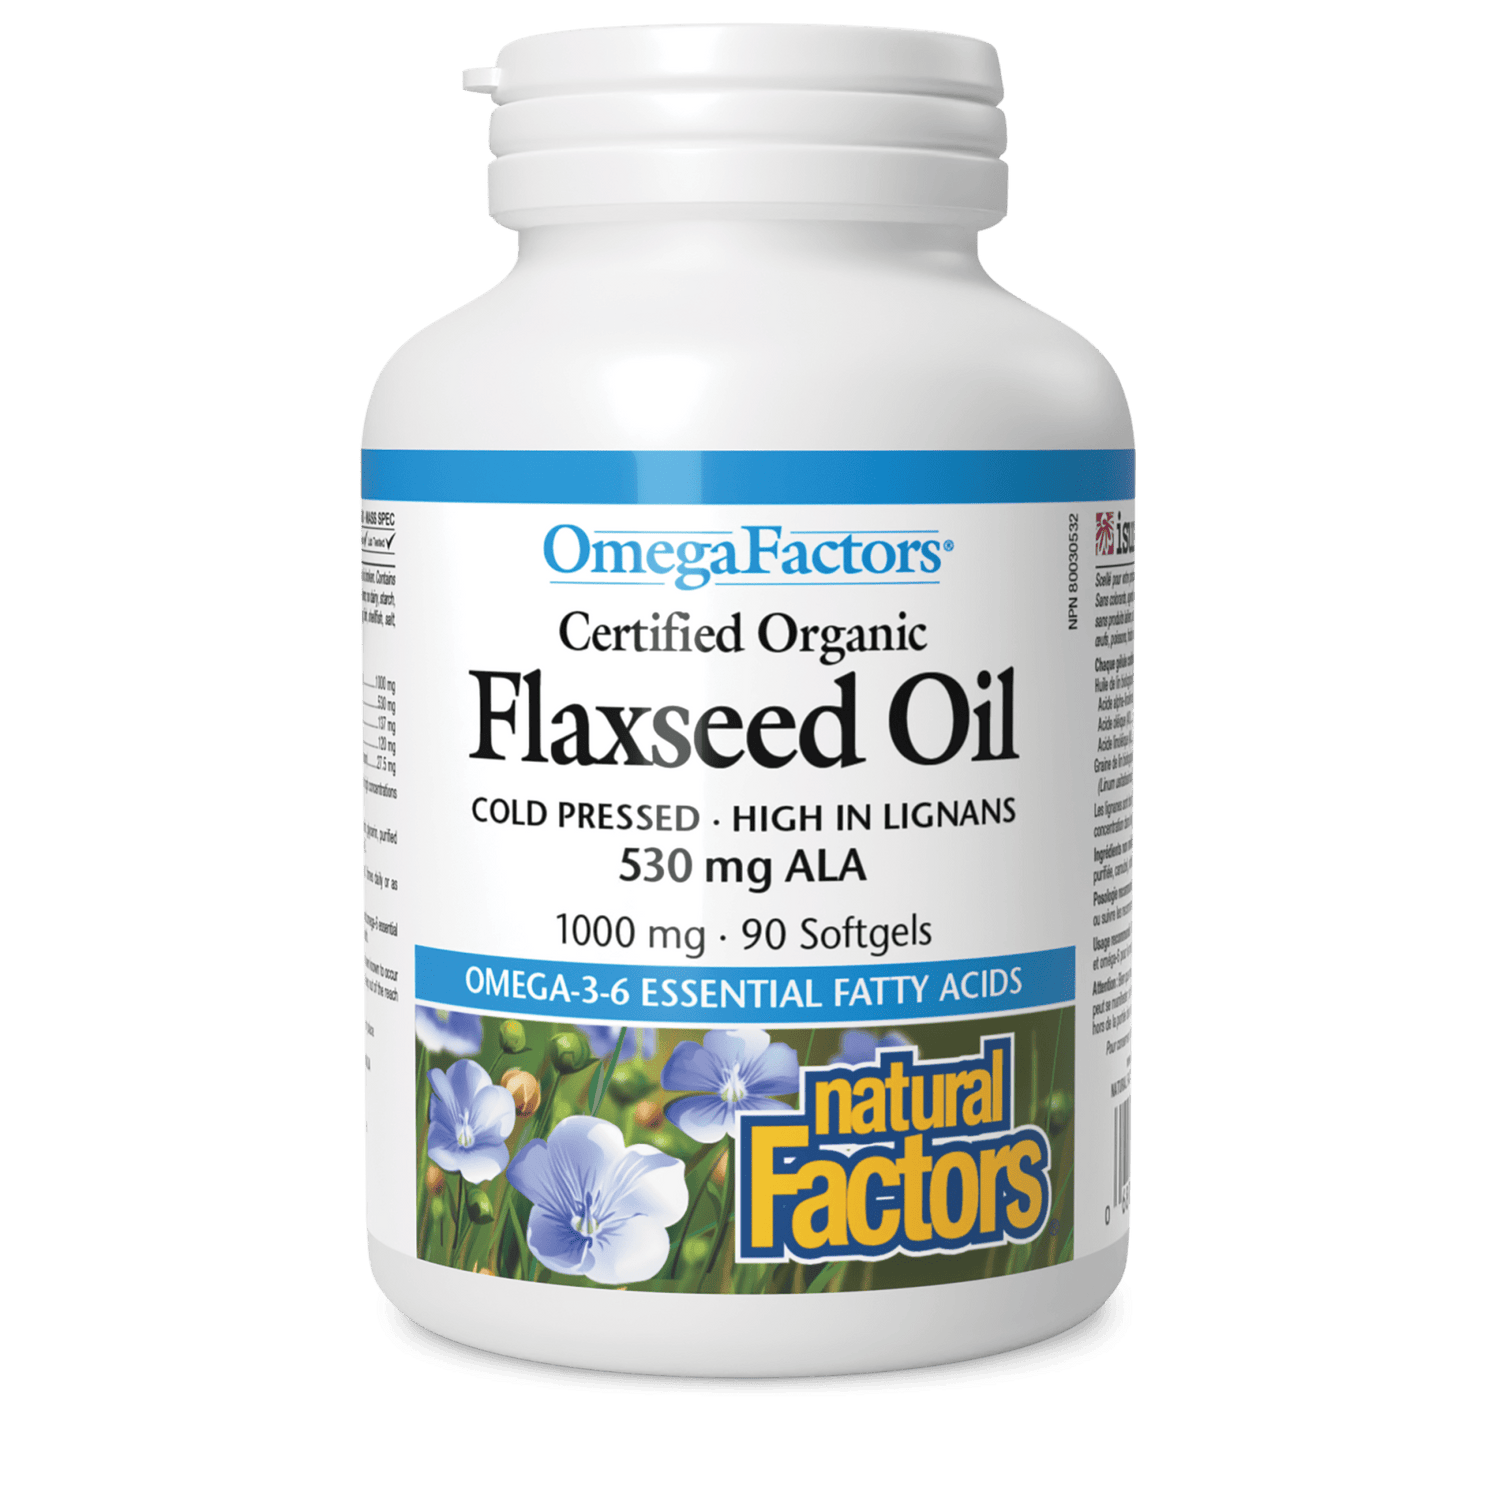 Flaxseed Oil Certified Organic 1000 mg, OmegaFactors, Natural Factors|v|image|2210